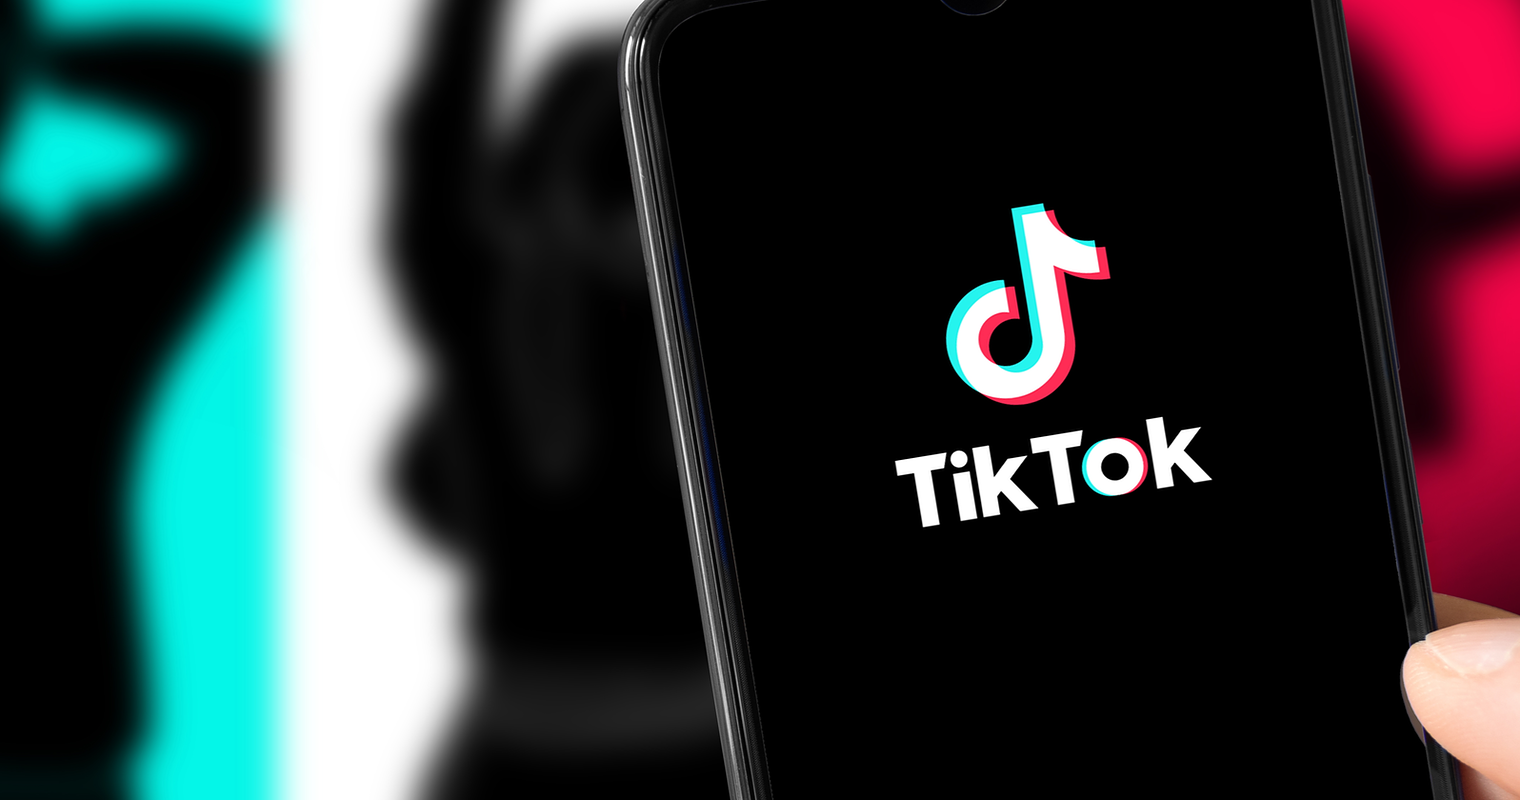 TikTok Marketing: How To Advertise Your Business on Tiktok